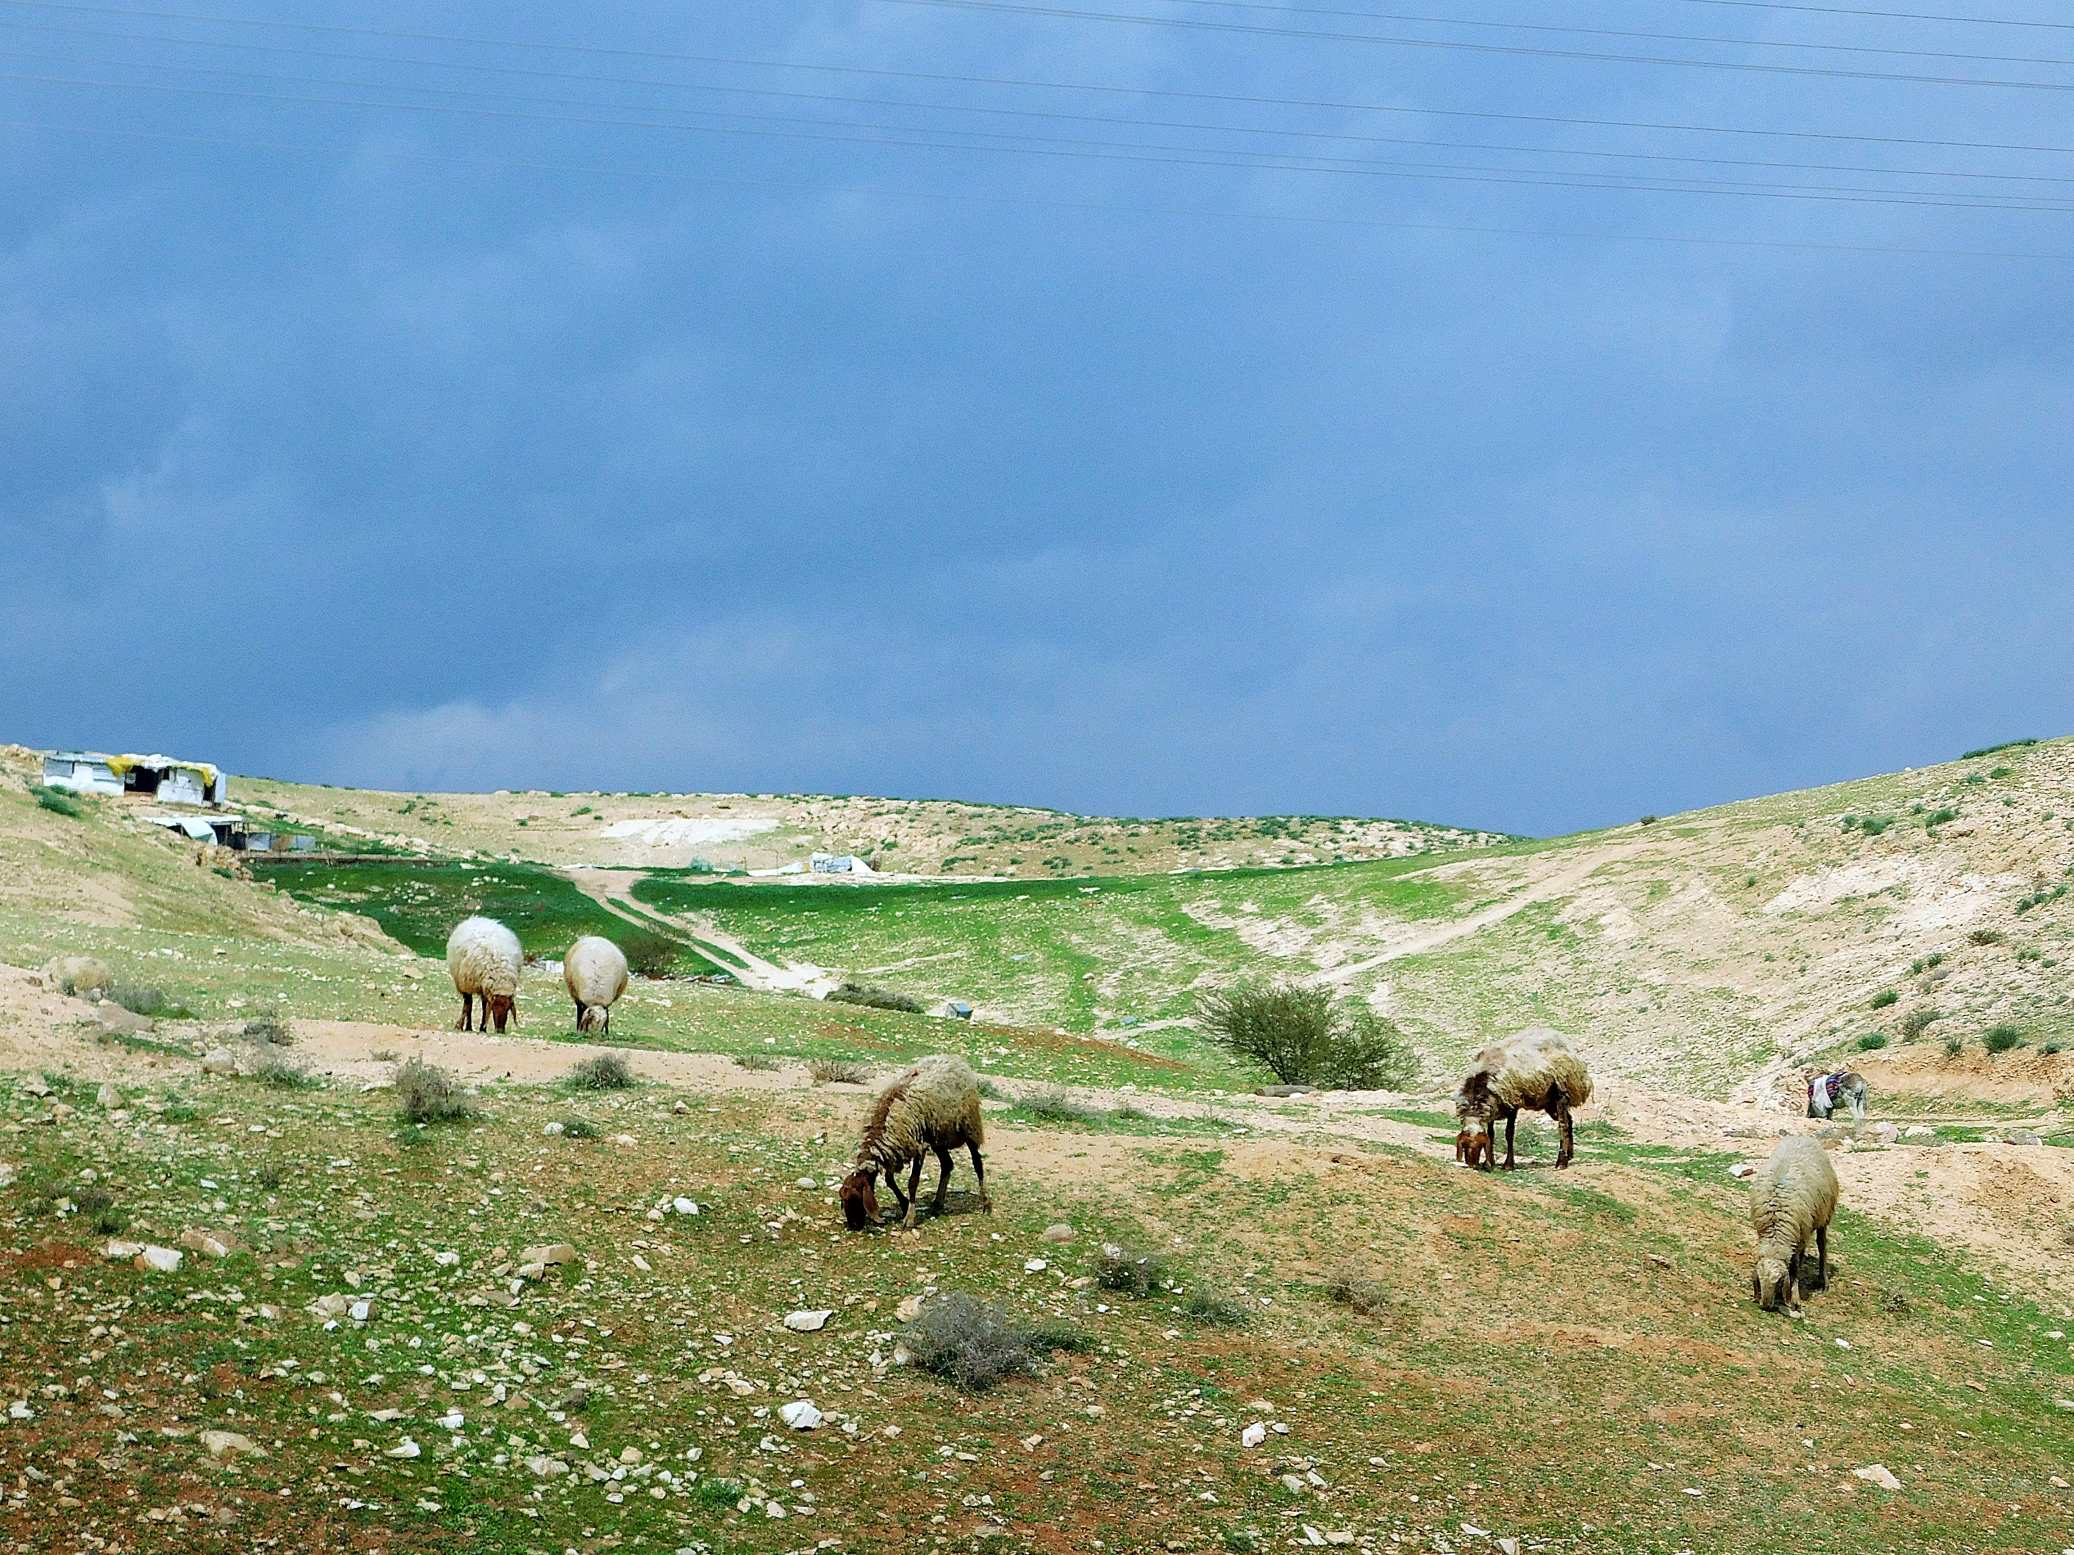 Sheep in the Jordan Valley, PhotoCredit: Sr. Amata CFSN